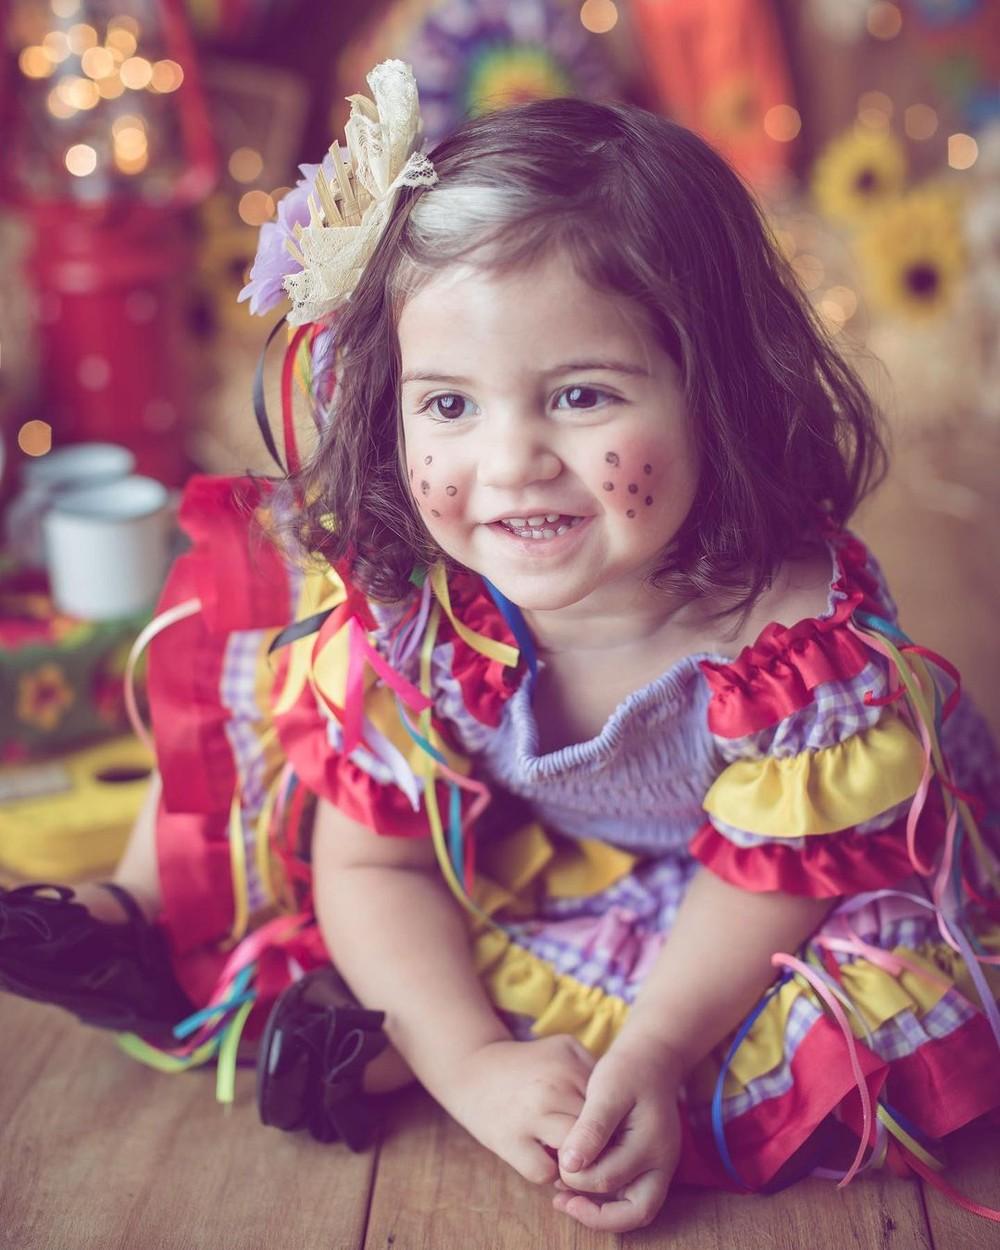 mayah la varsta de doi ani, imbracata cu o rochita mov cu rosu